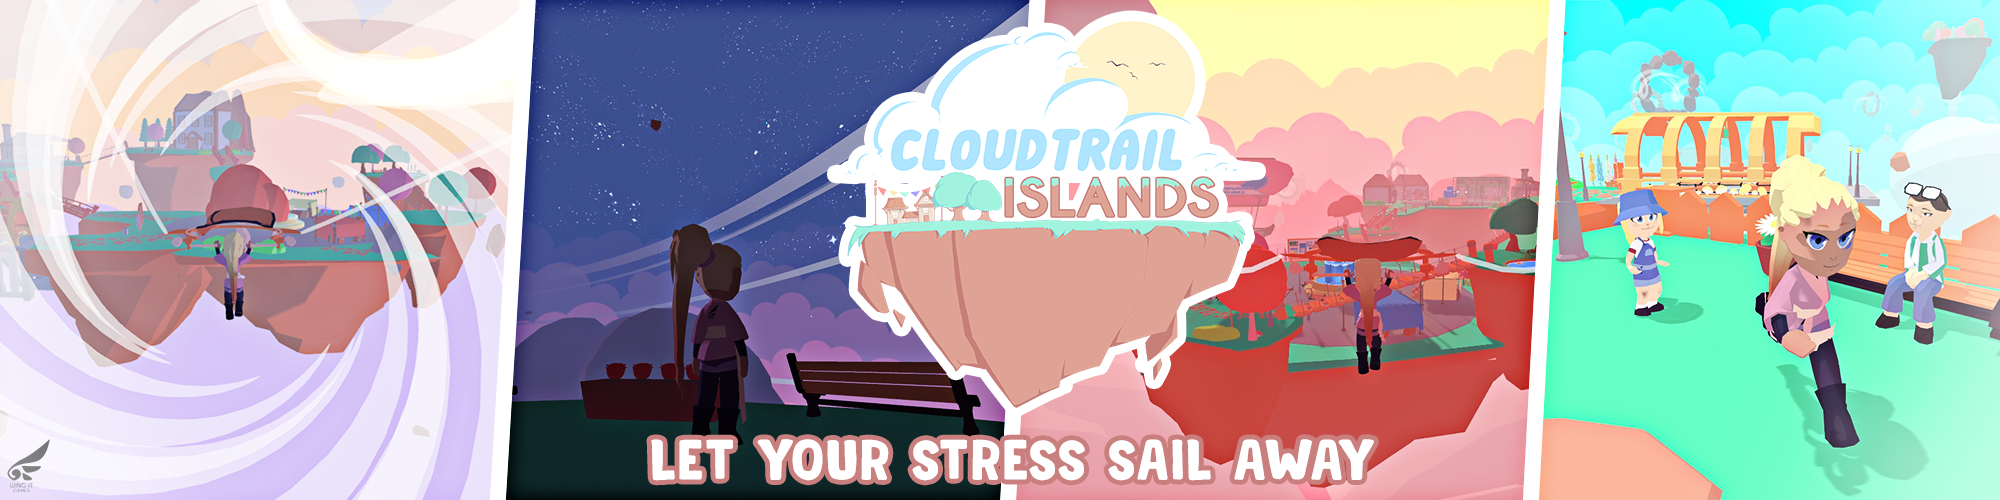 Cloudtrail Islands